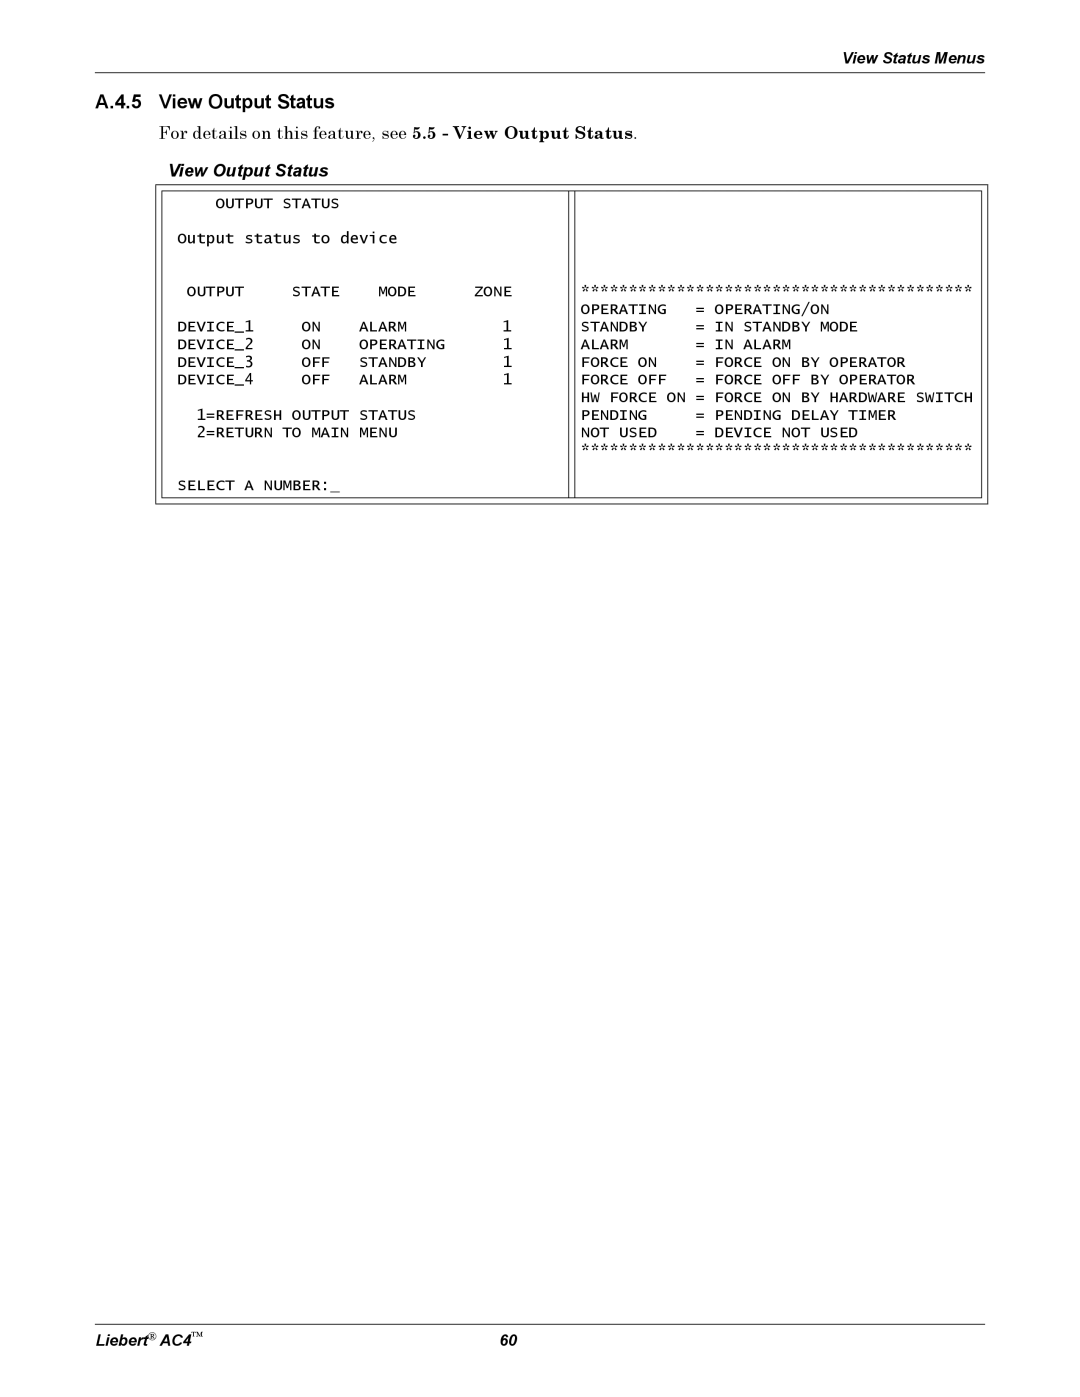 Emerson user manual A.4.5 View Output Status, View Status Menus, Liebert AC4 